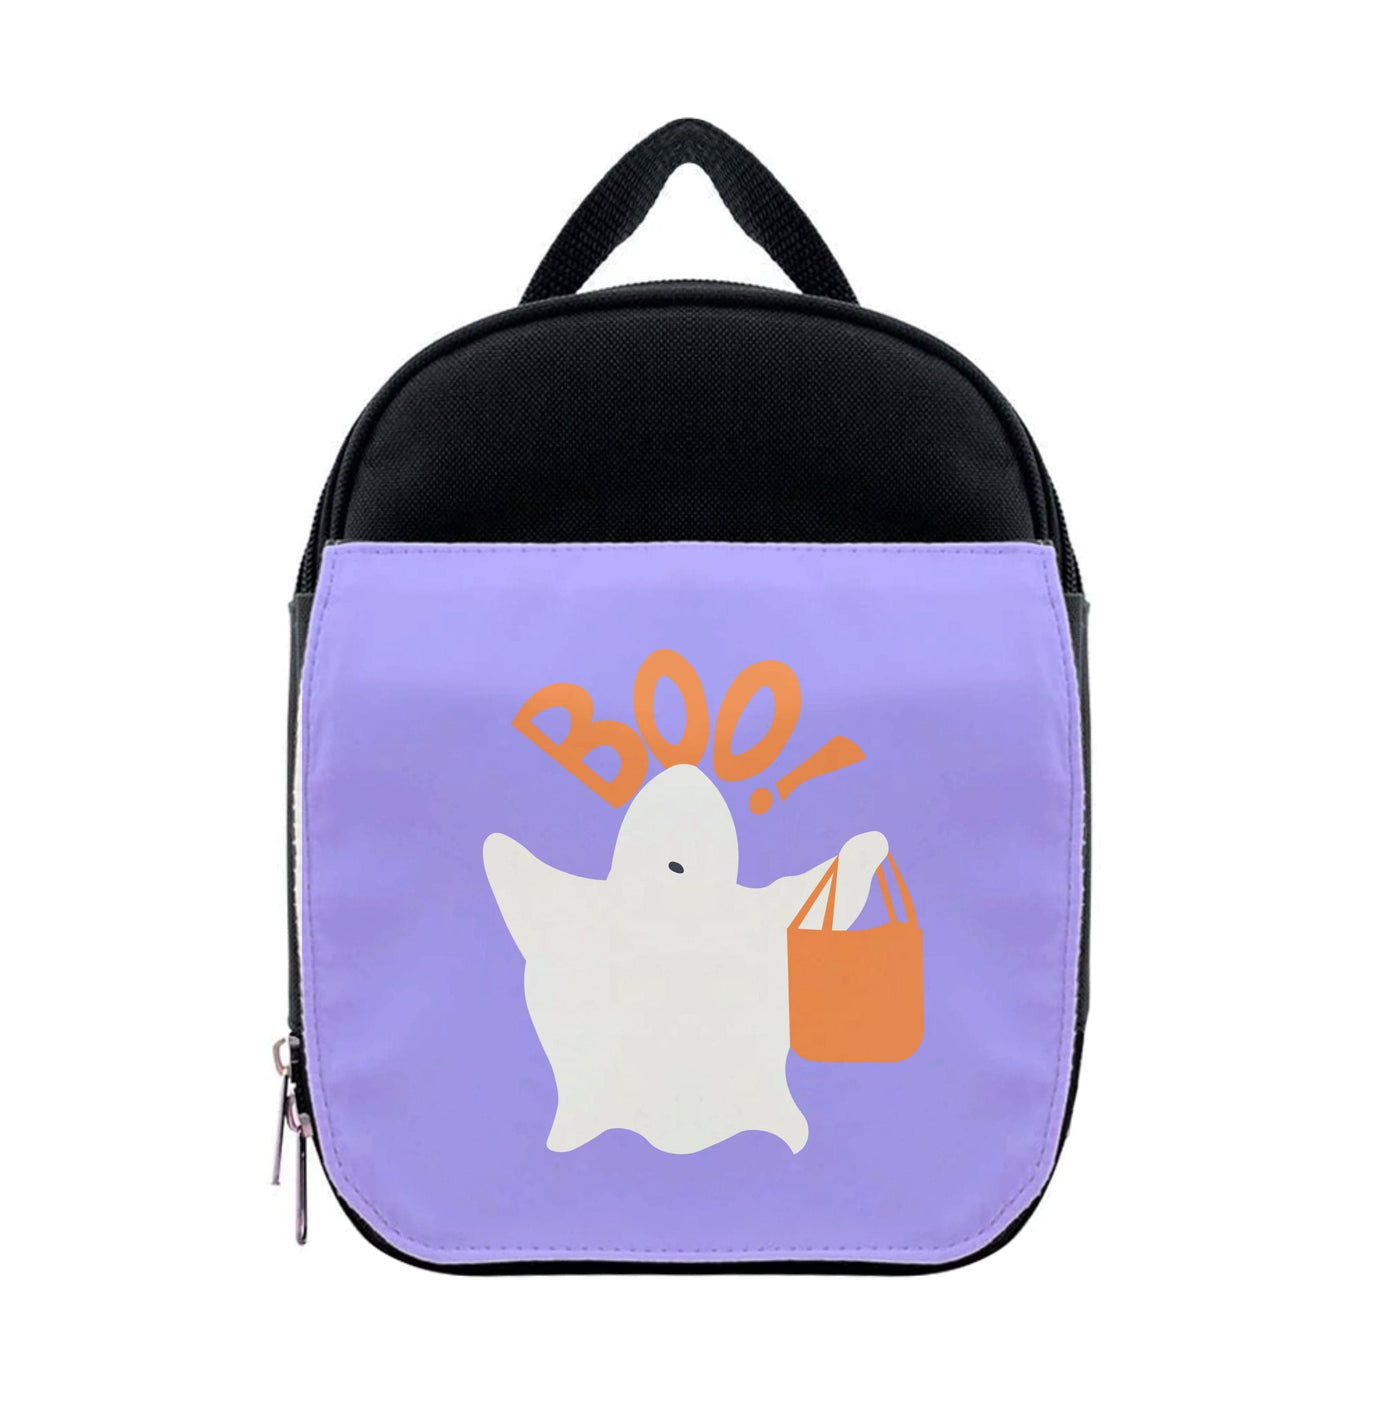 Ghost Boo! - Halloween Lunchbox